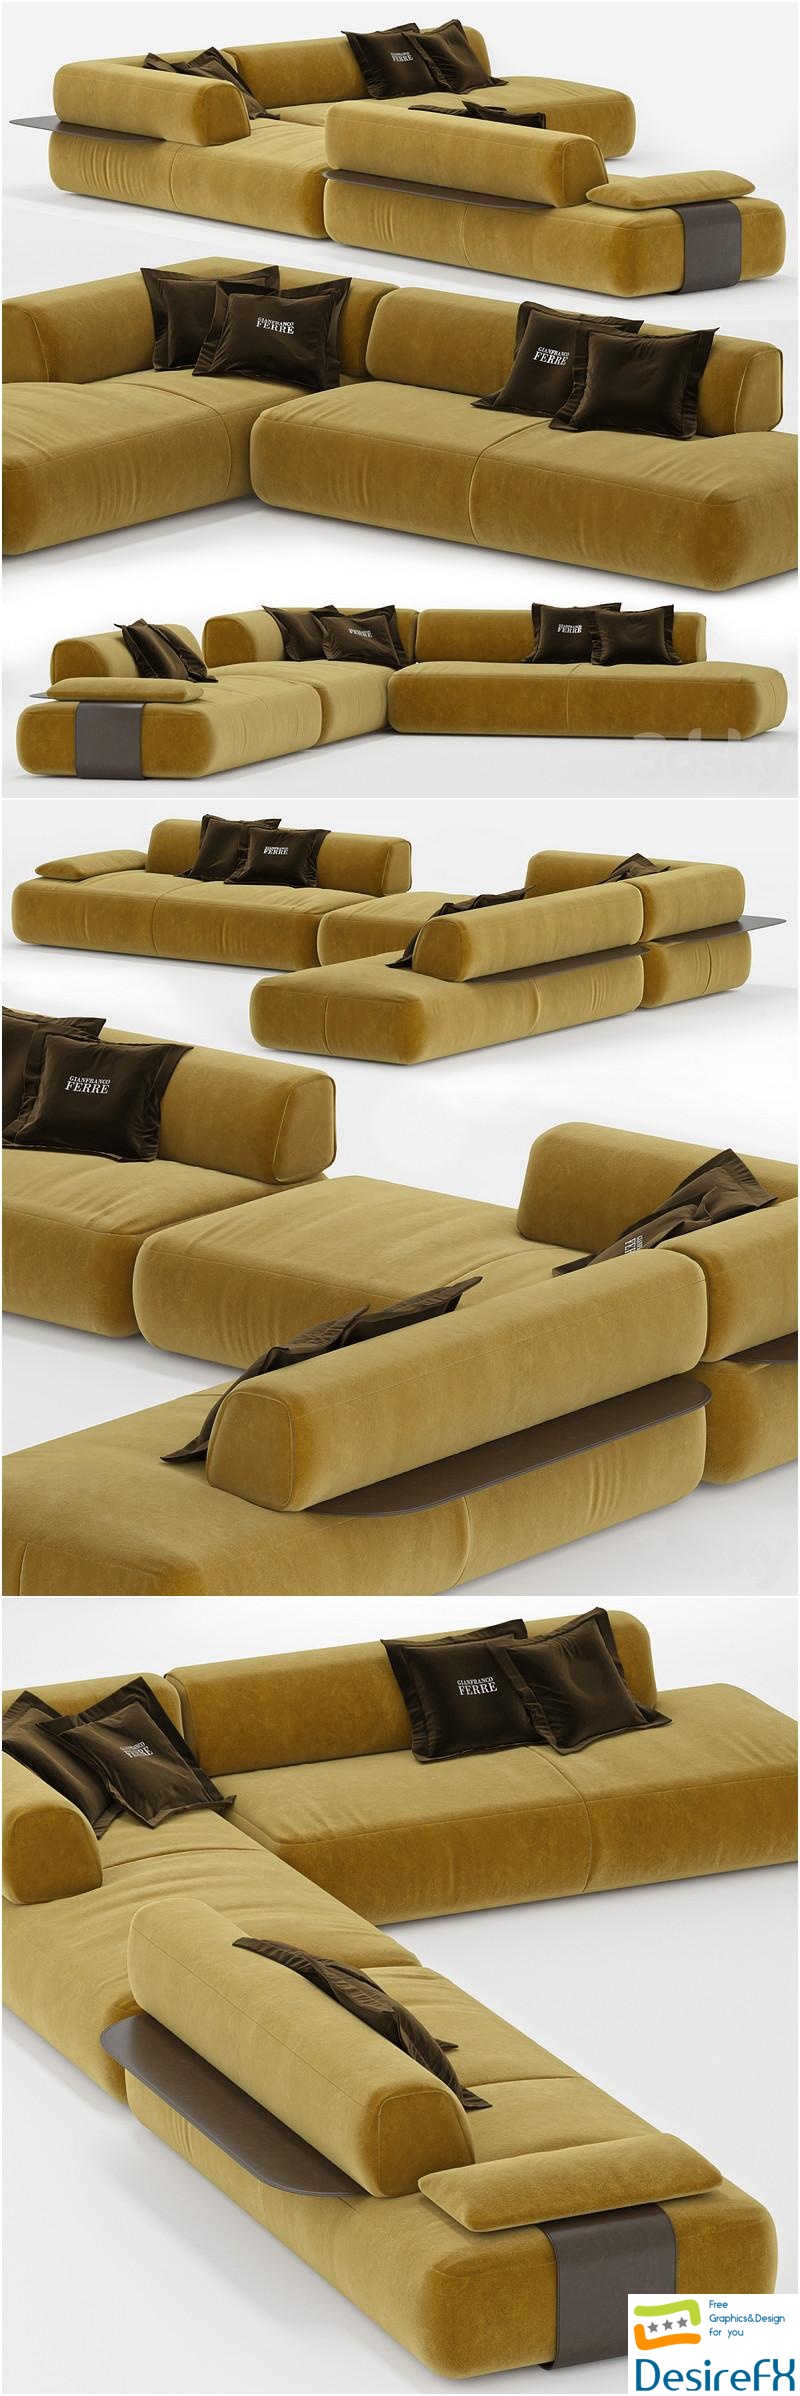 GIANFRANCO FERRE sofa 3D Model